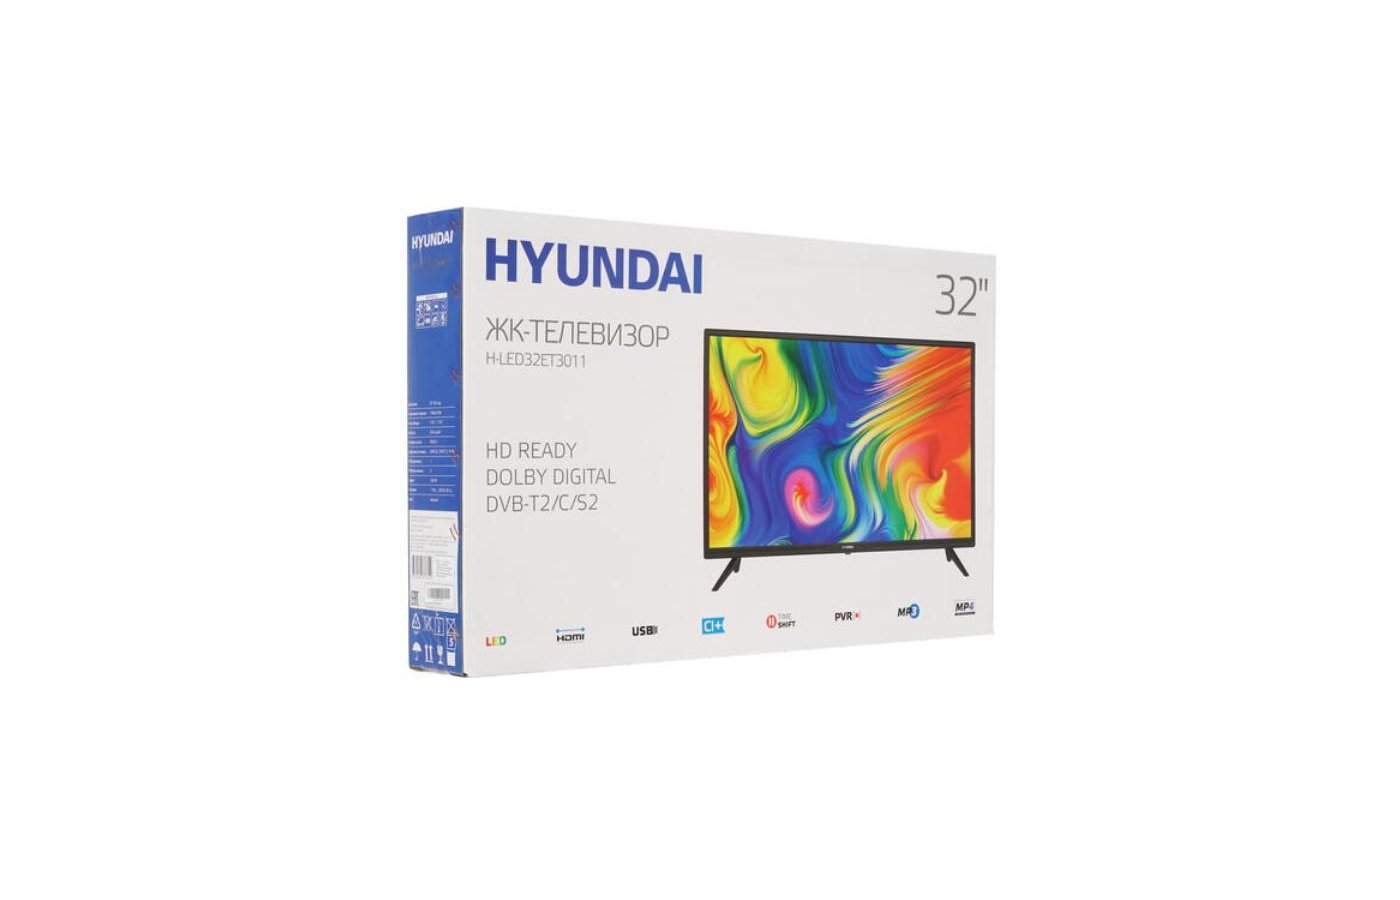 Телевизор hyundai led32bs5003. Телевизор Hyundai h-led32et3011. Телевизор Hyundai отзывы. Характеристики Hyundai h-led32et3011 2020 led -. ТВ Хендай 70 см отзывы.